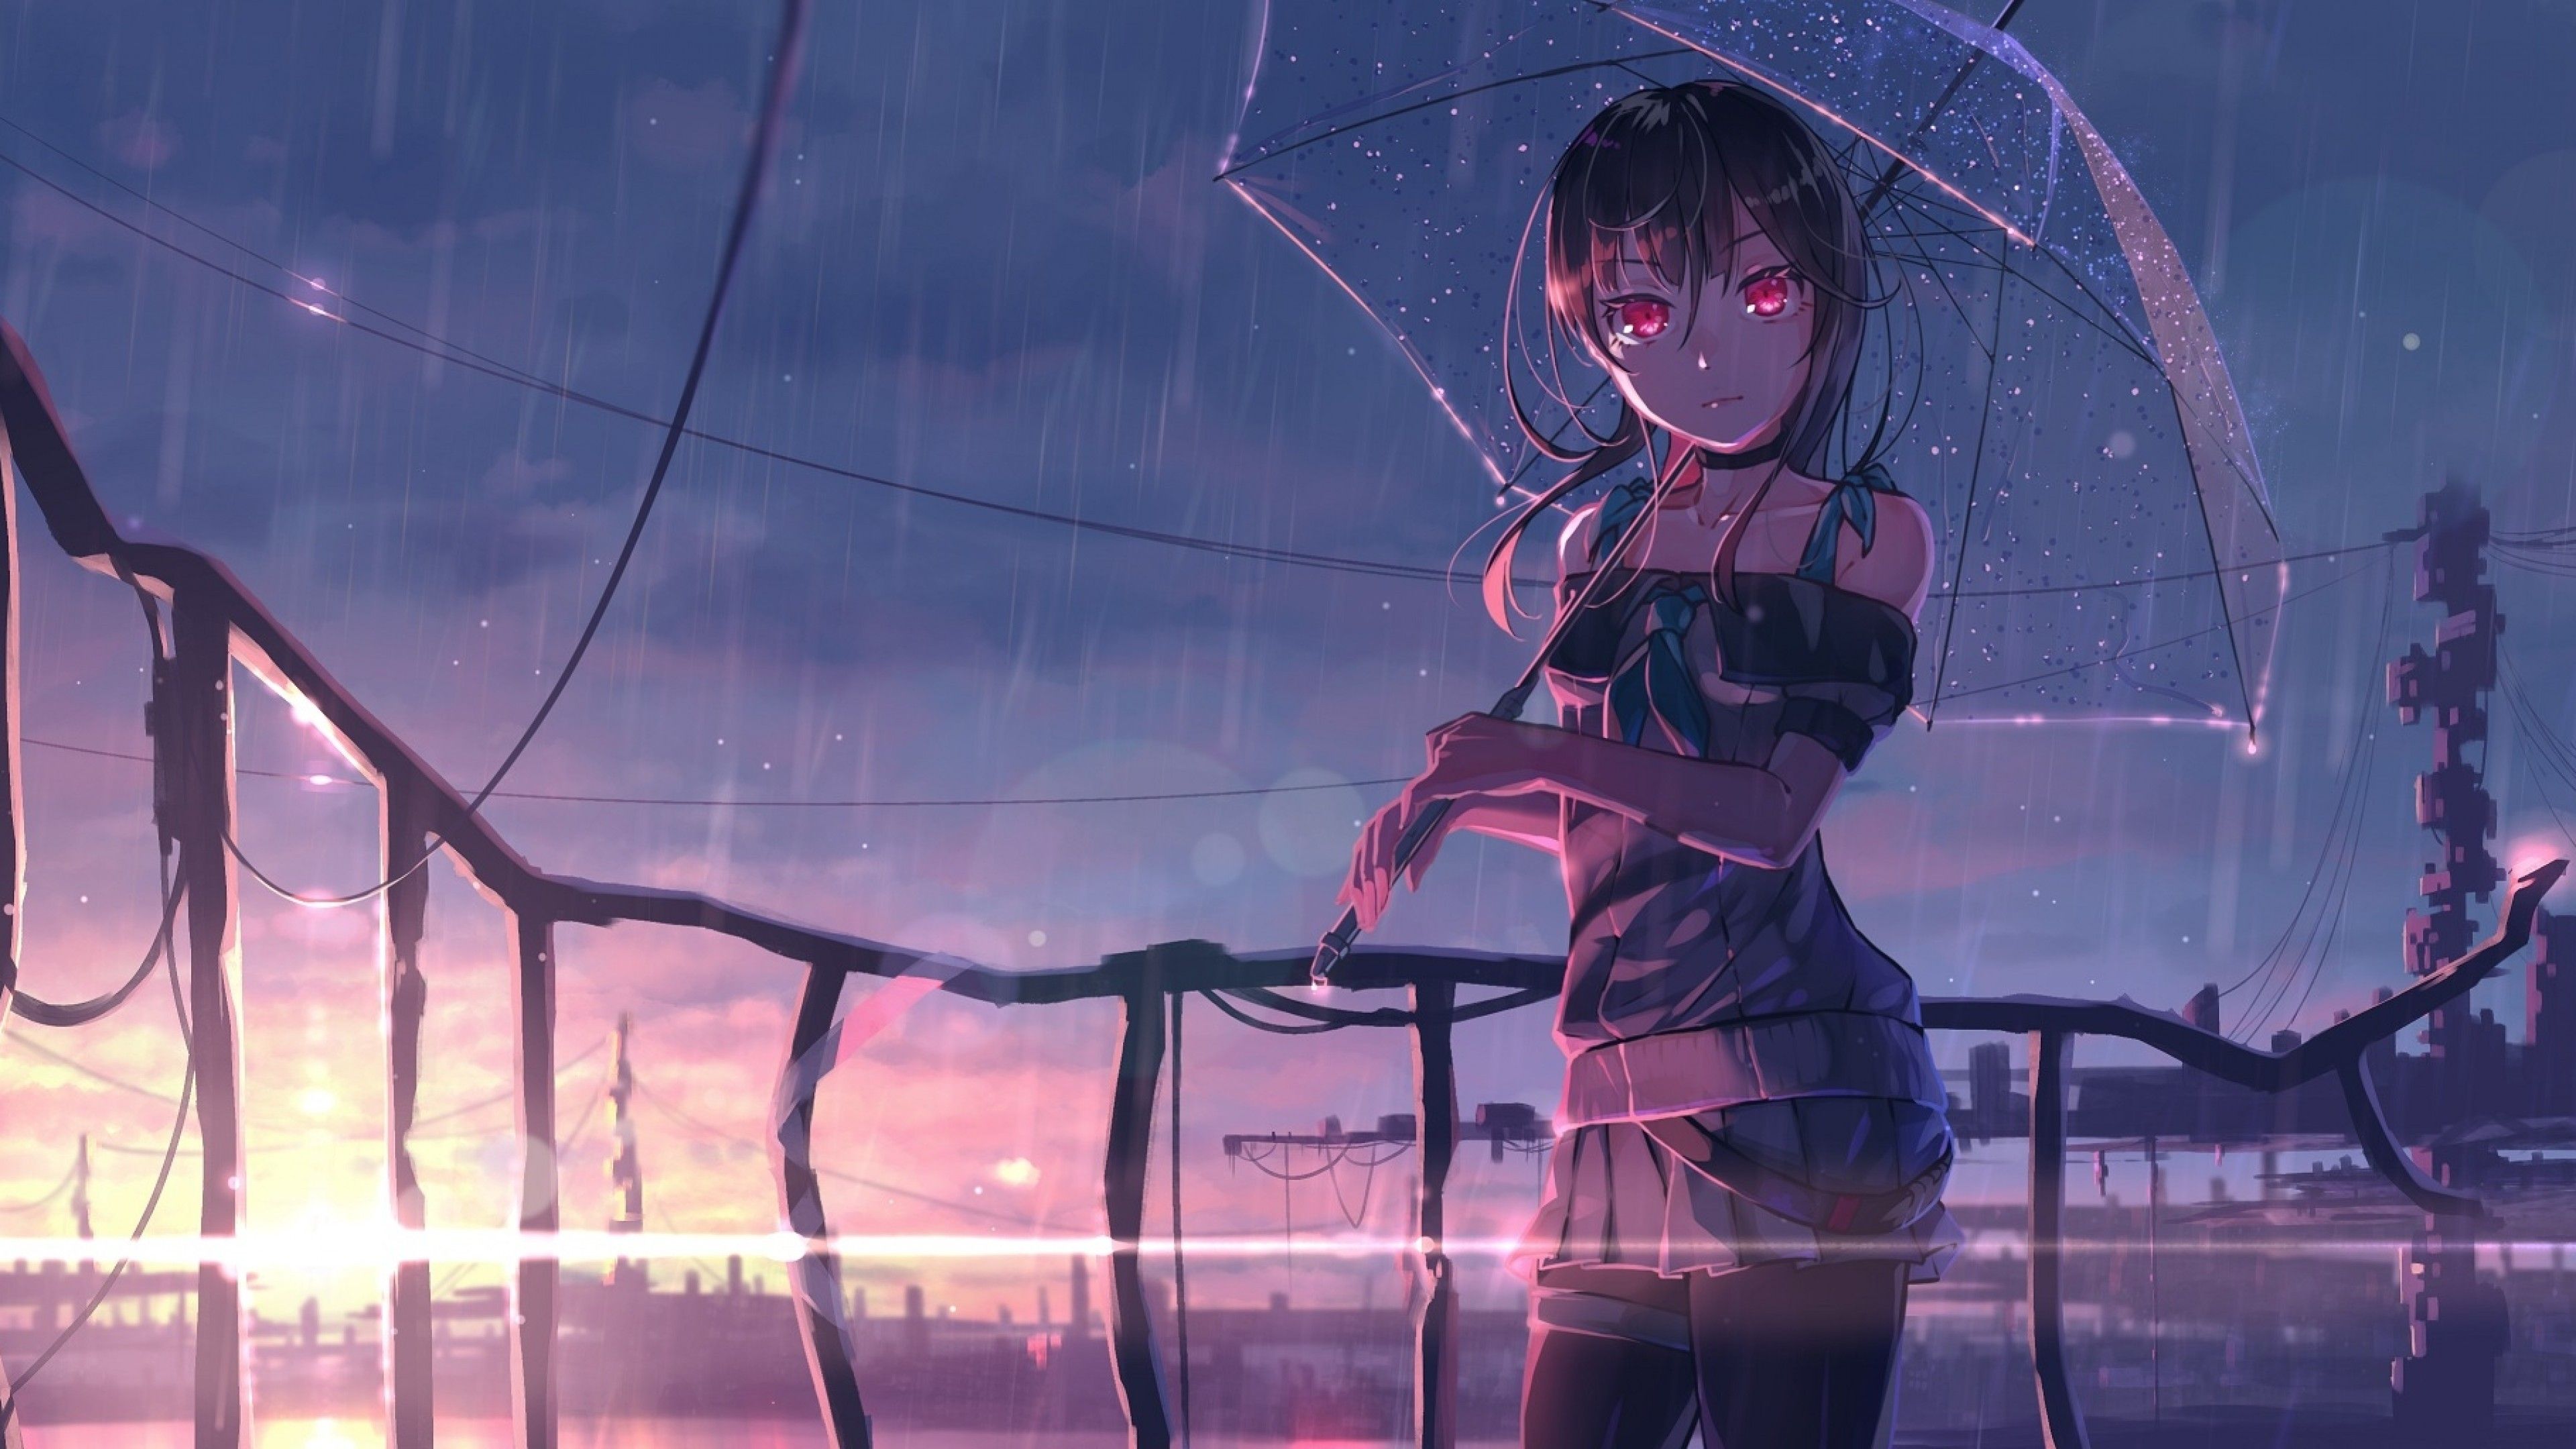 Download 3840x2160 Anime Girl, Raining, Sunset, Transparent Umbrella, Scenery Wallpaper for UHD TV